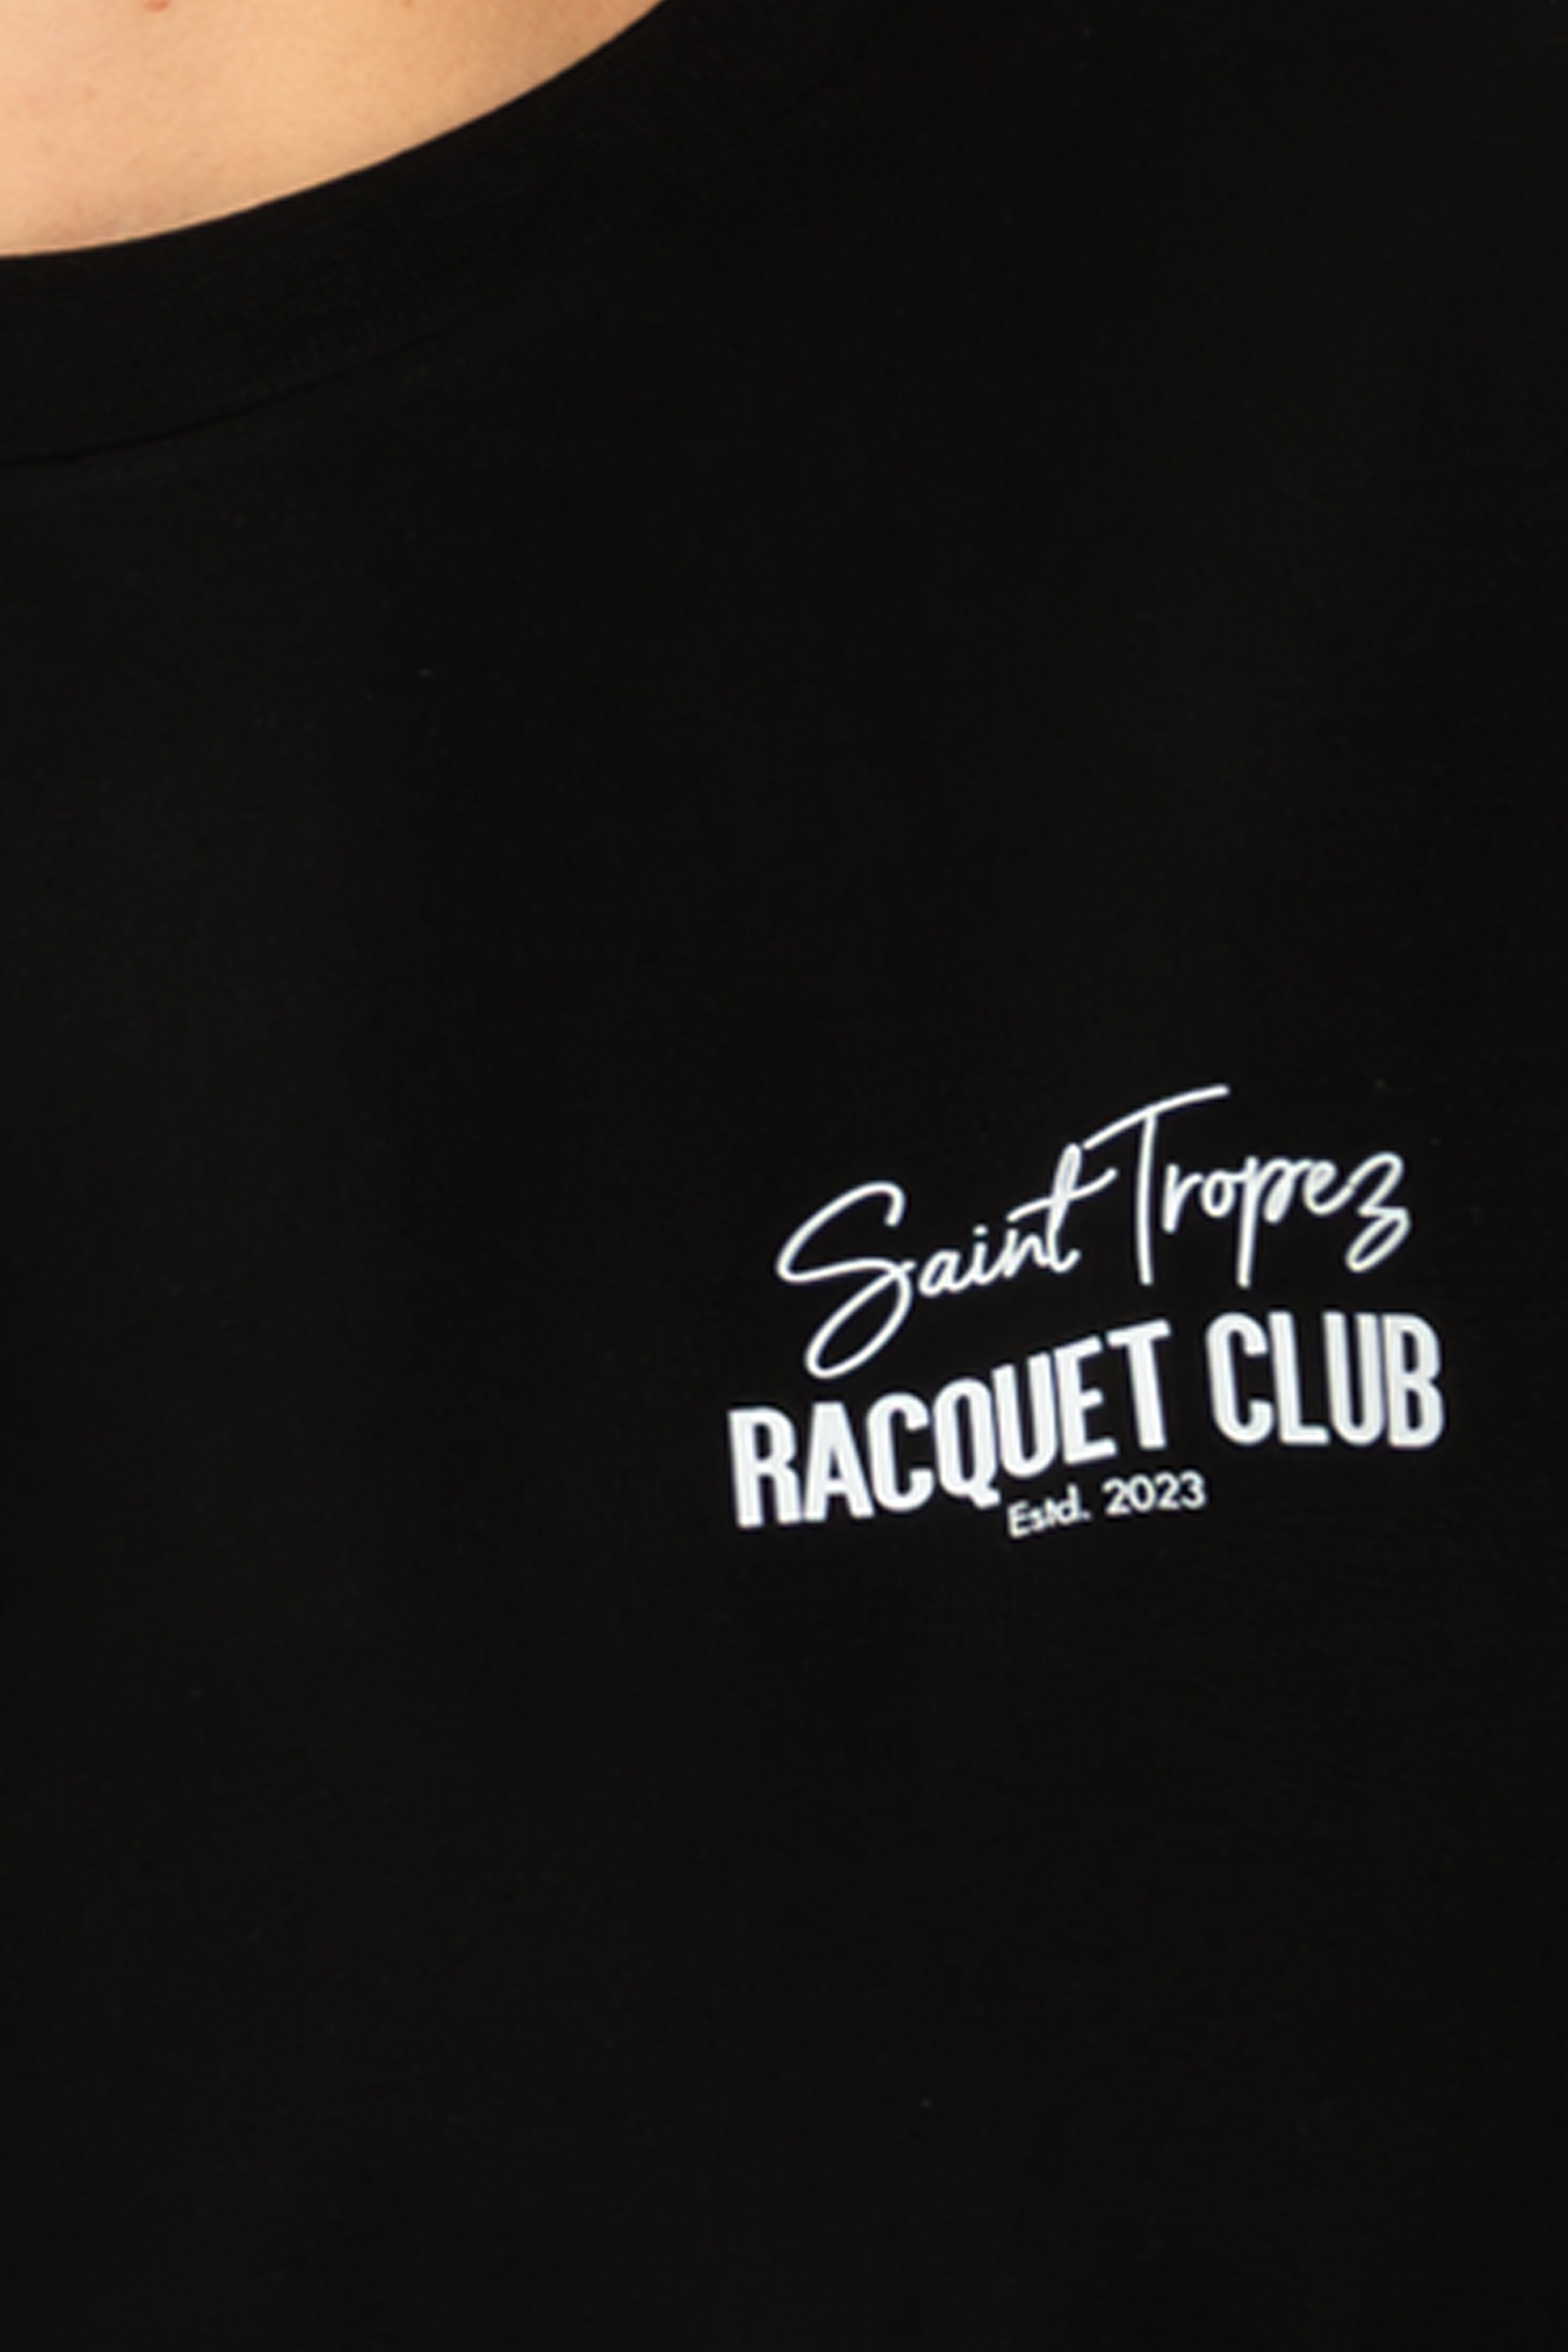 Racquet Lover Oversize T-Shirt Kadın - Siyah